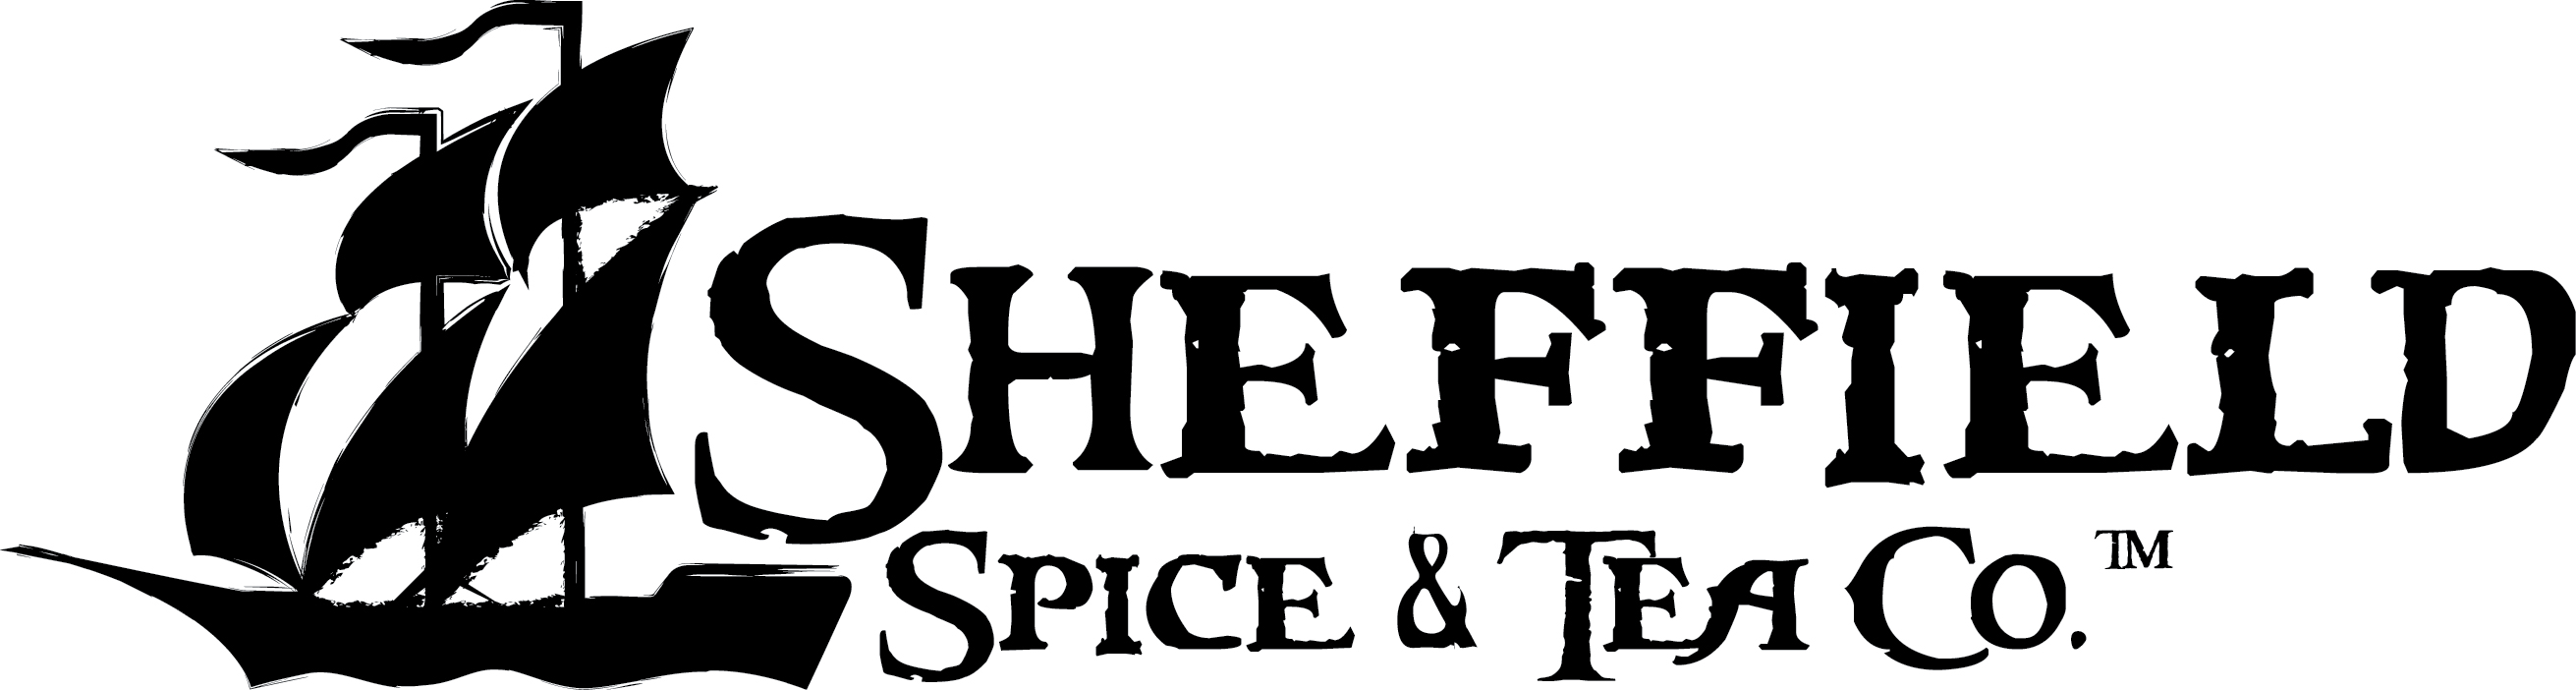 Thor Iced Tea Maker - Sheffield Spice & Tea Co